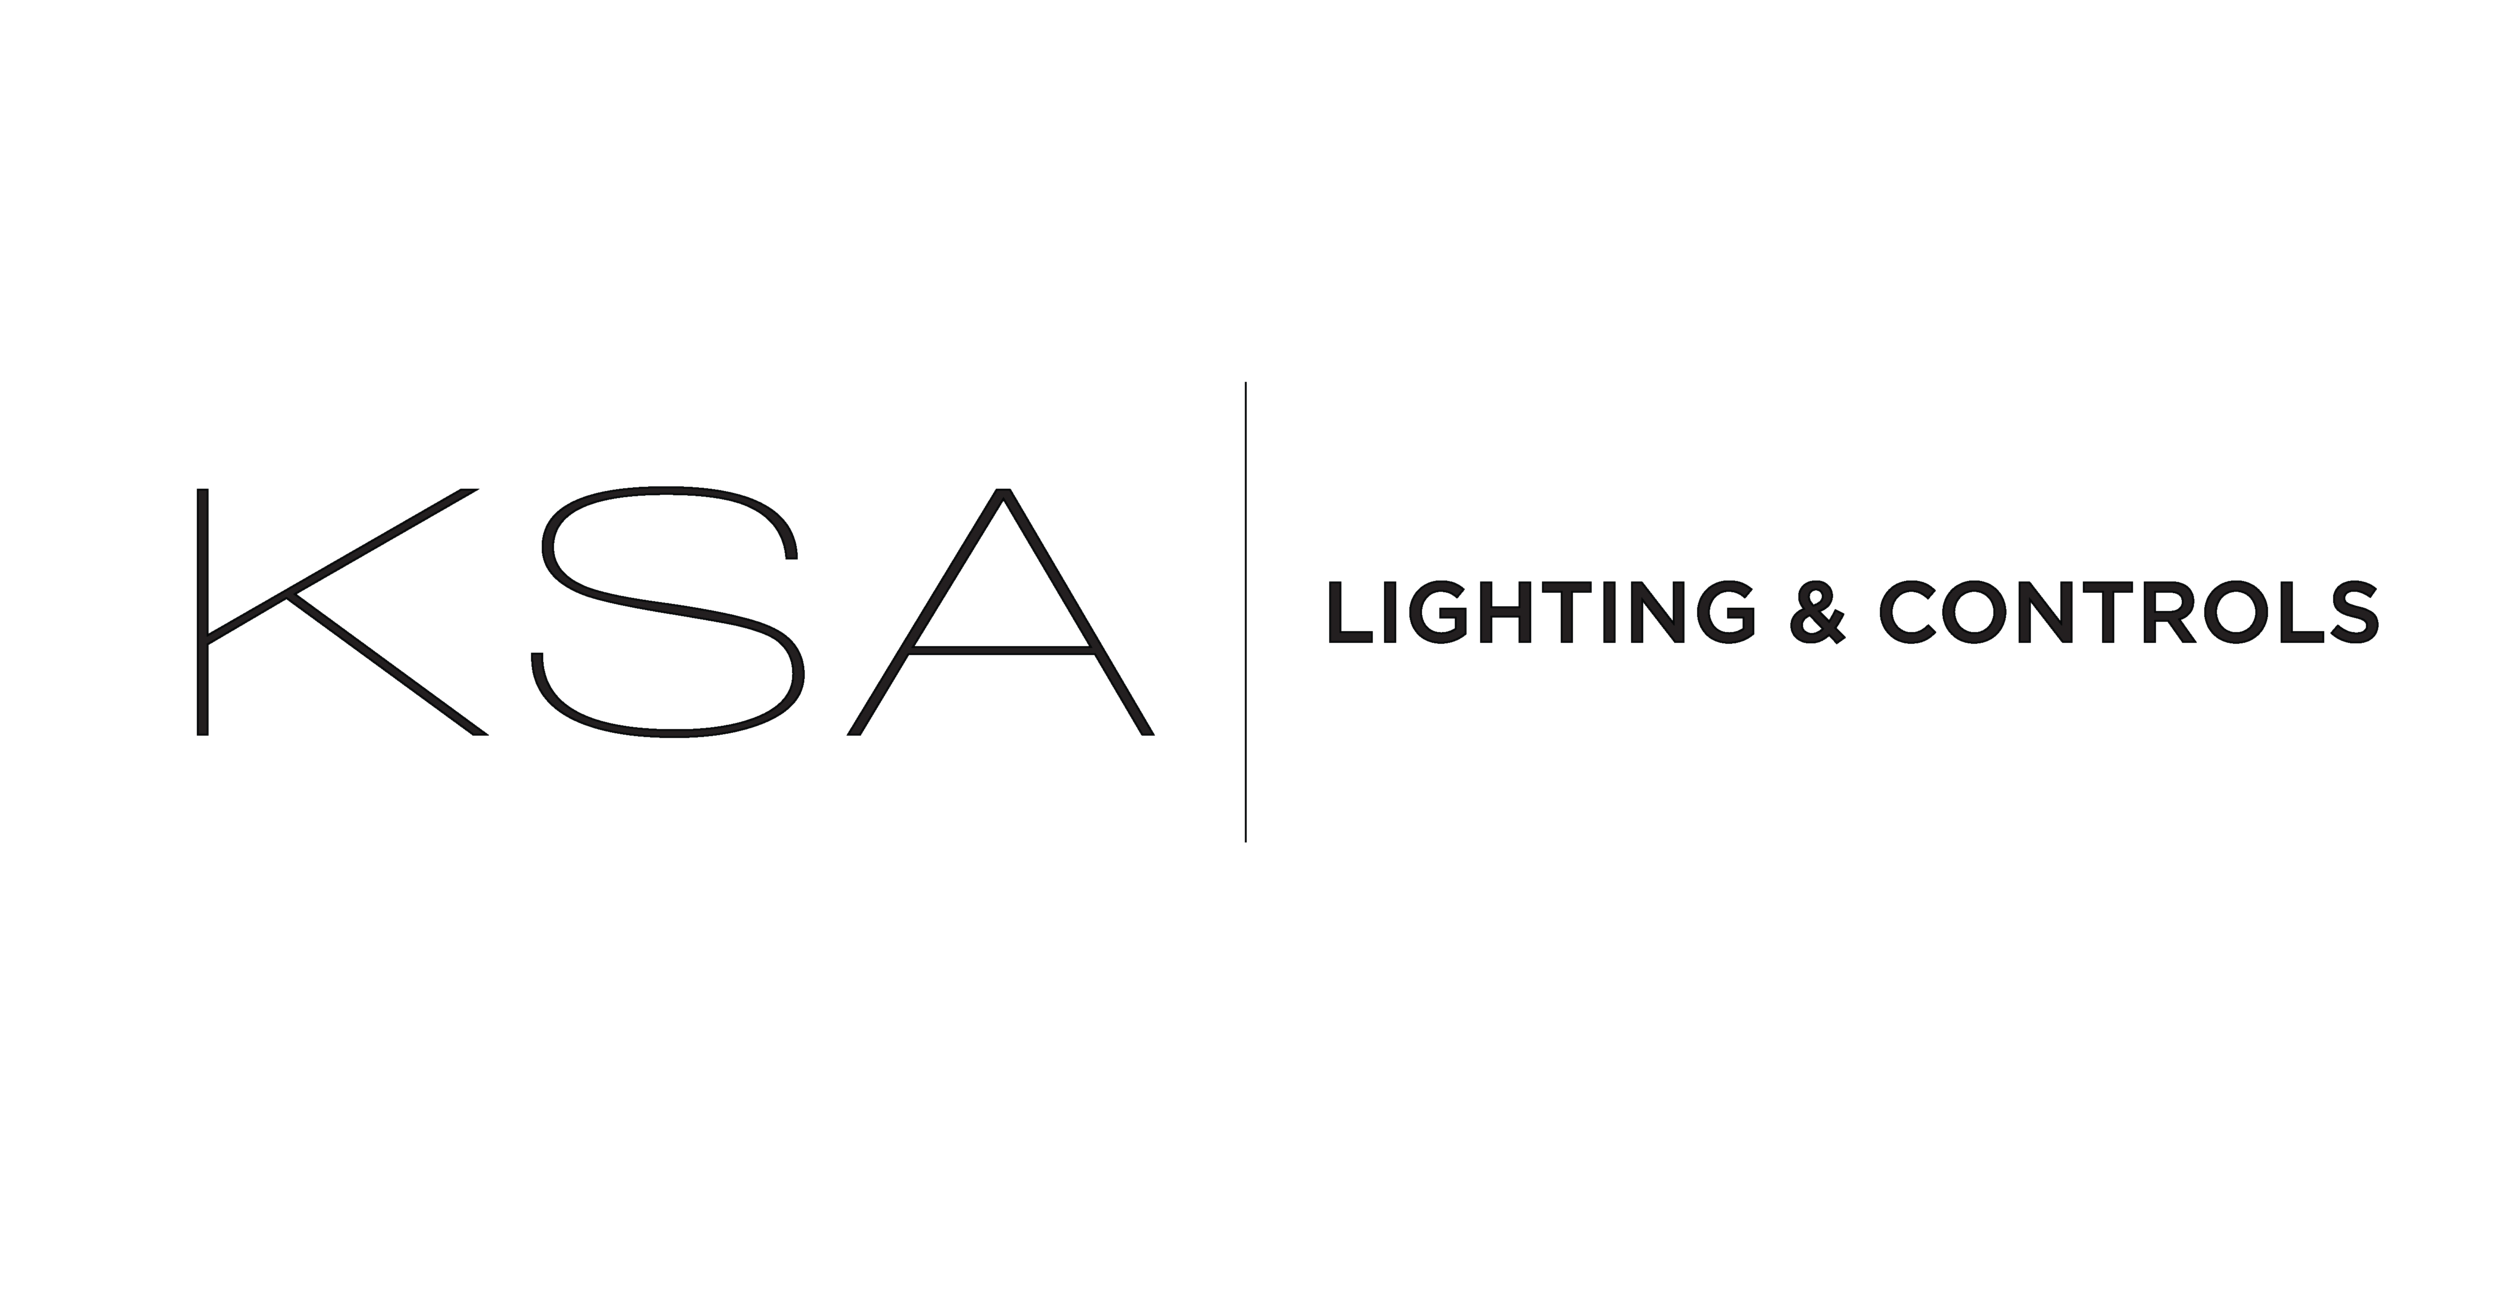 KSA Lighting &amp; Controls